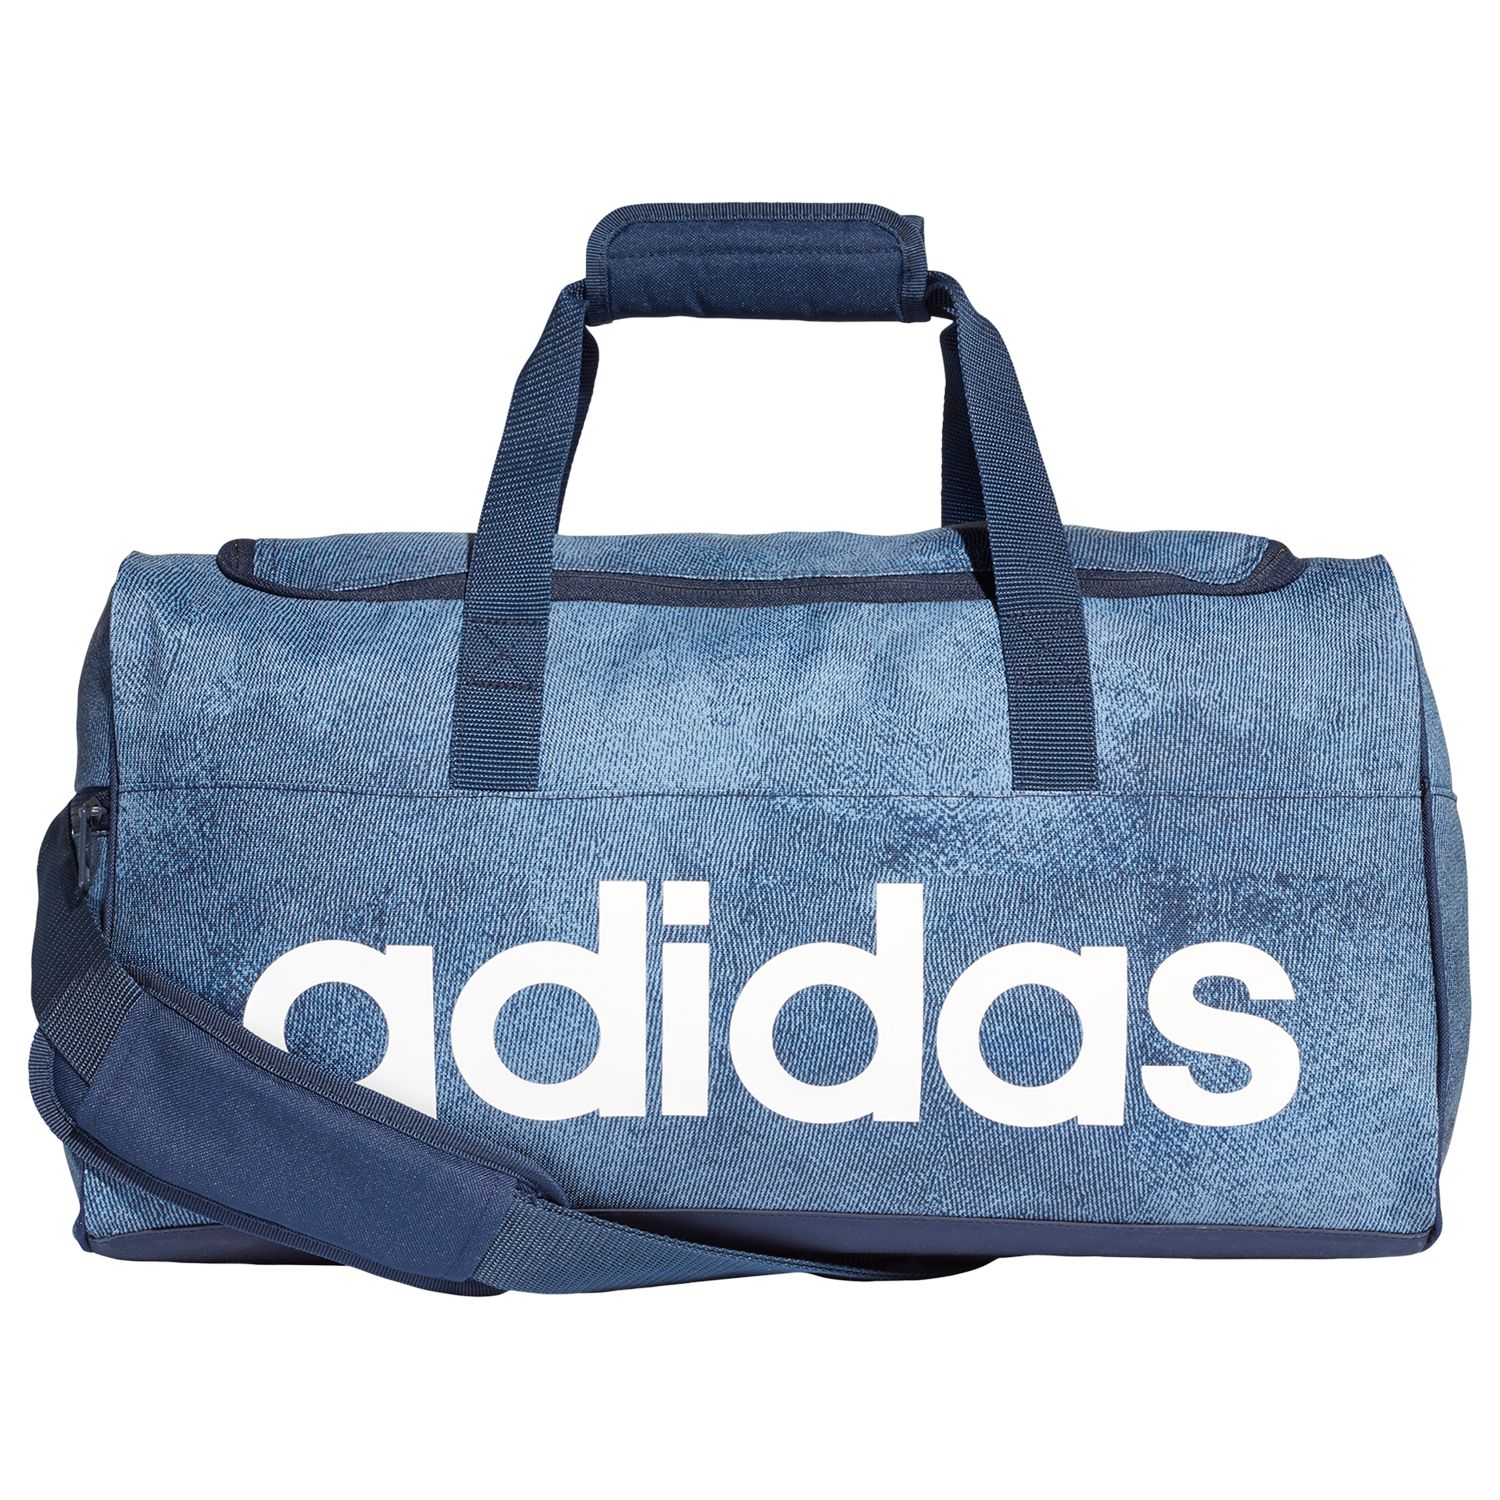 adidas linear team bag small